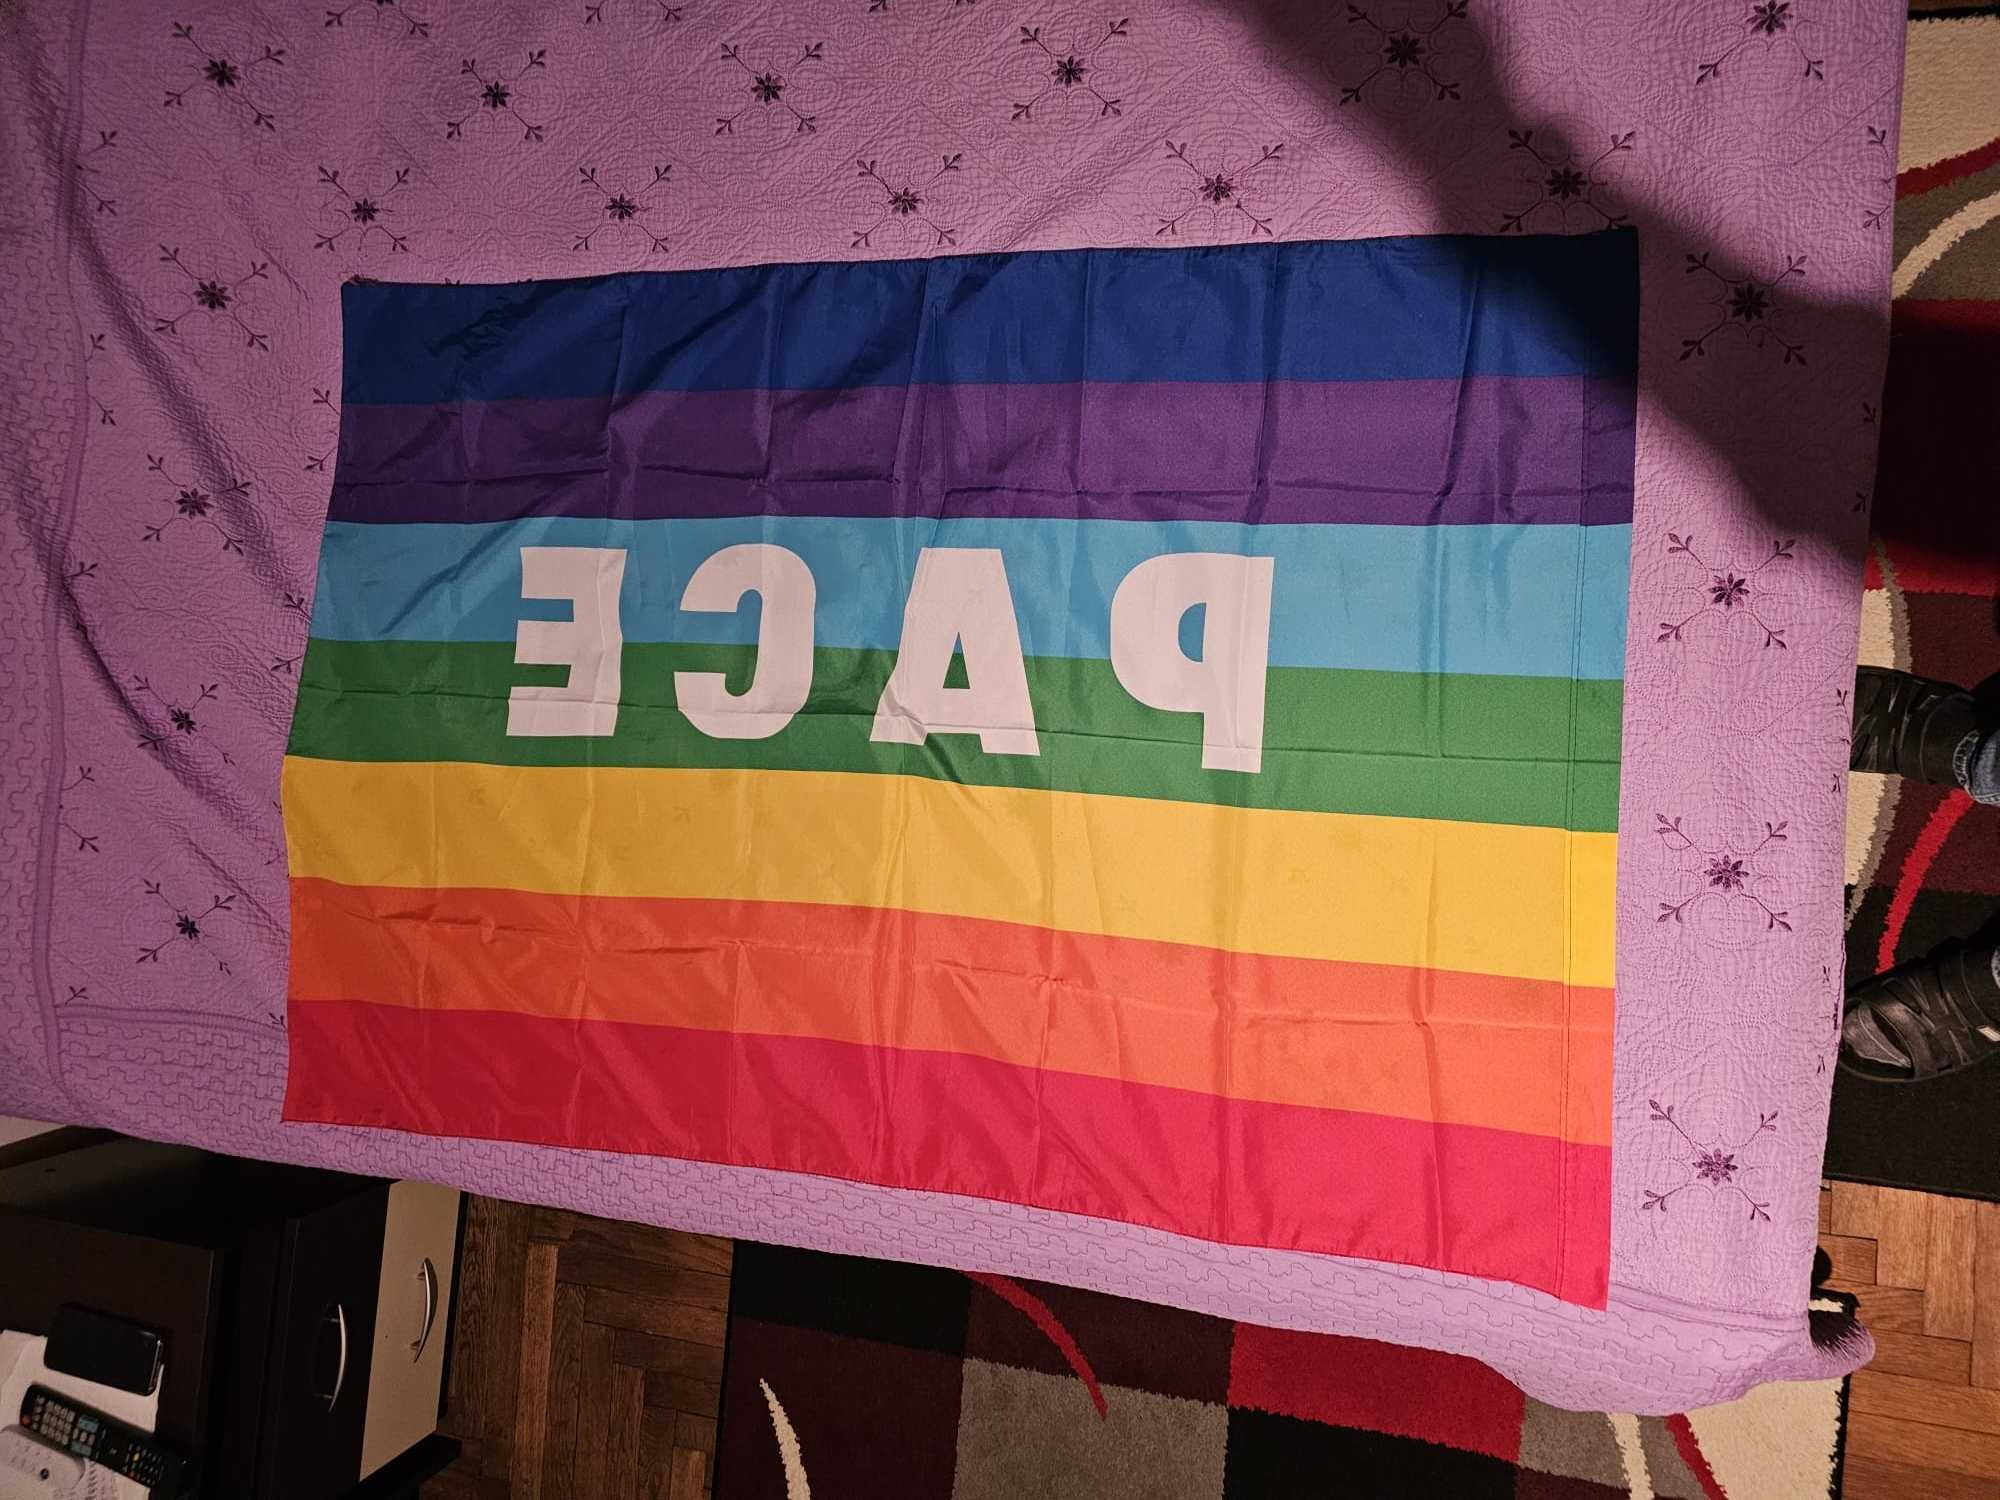 Steag Rainbow dimensiuni mari